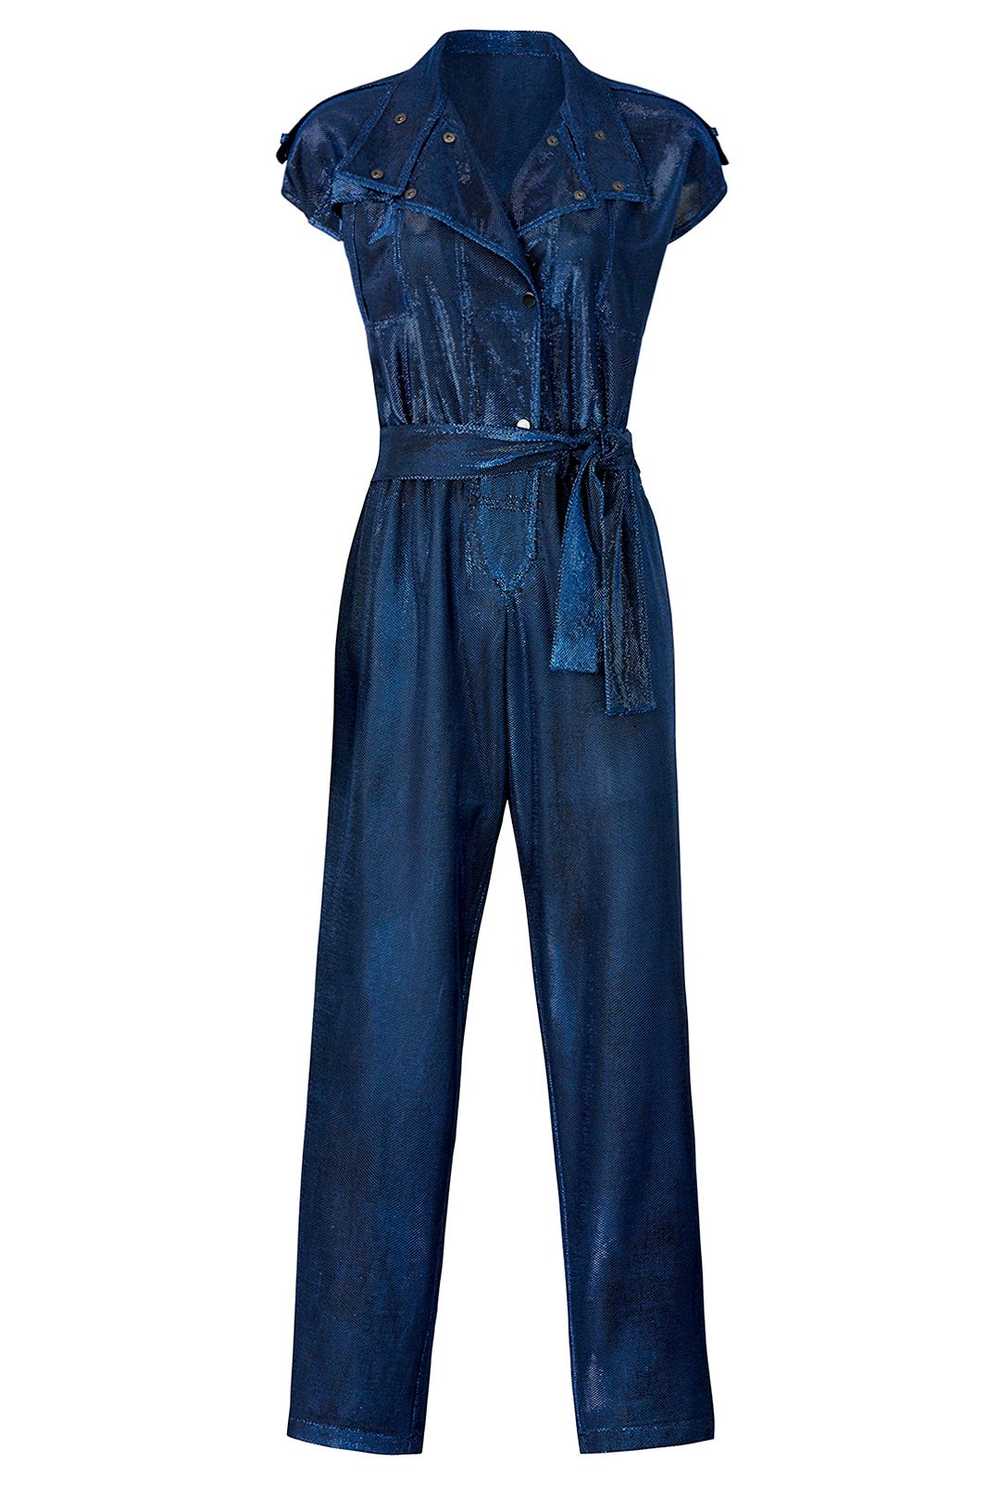 Carolina Ritzler Retro Blue Jumpsuit - image 4